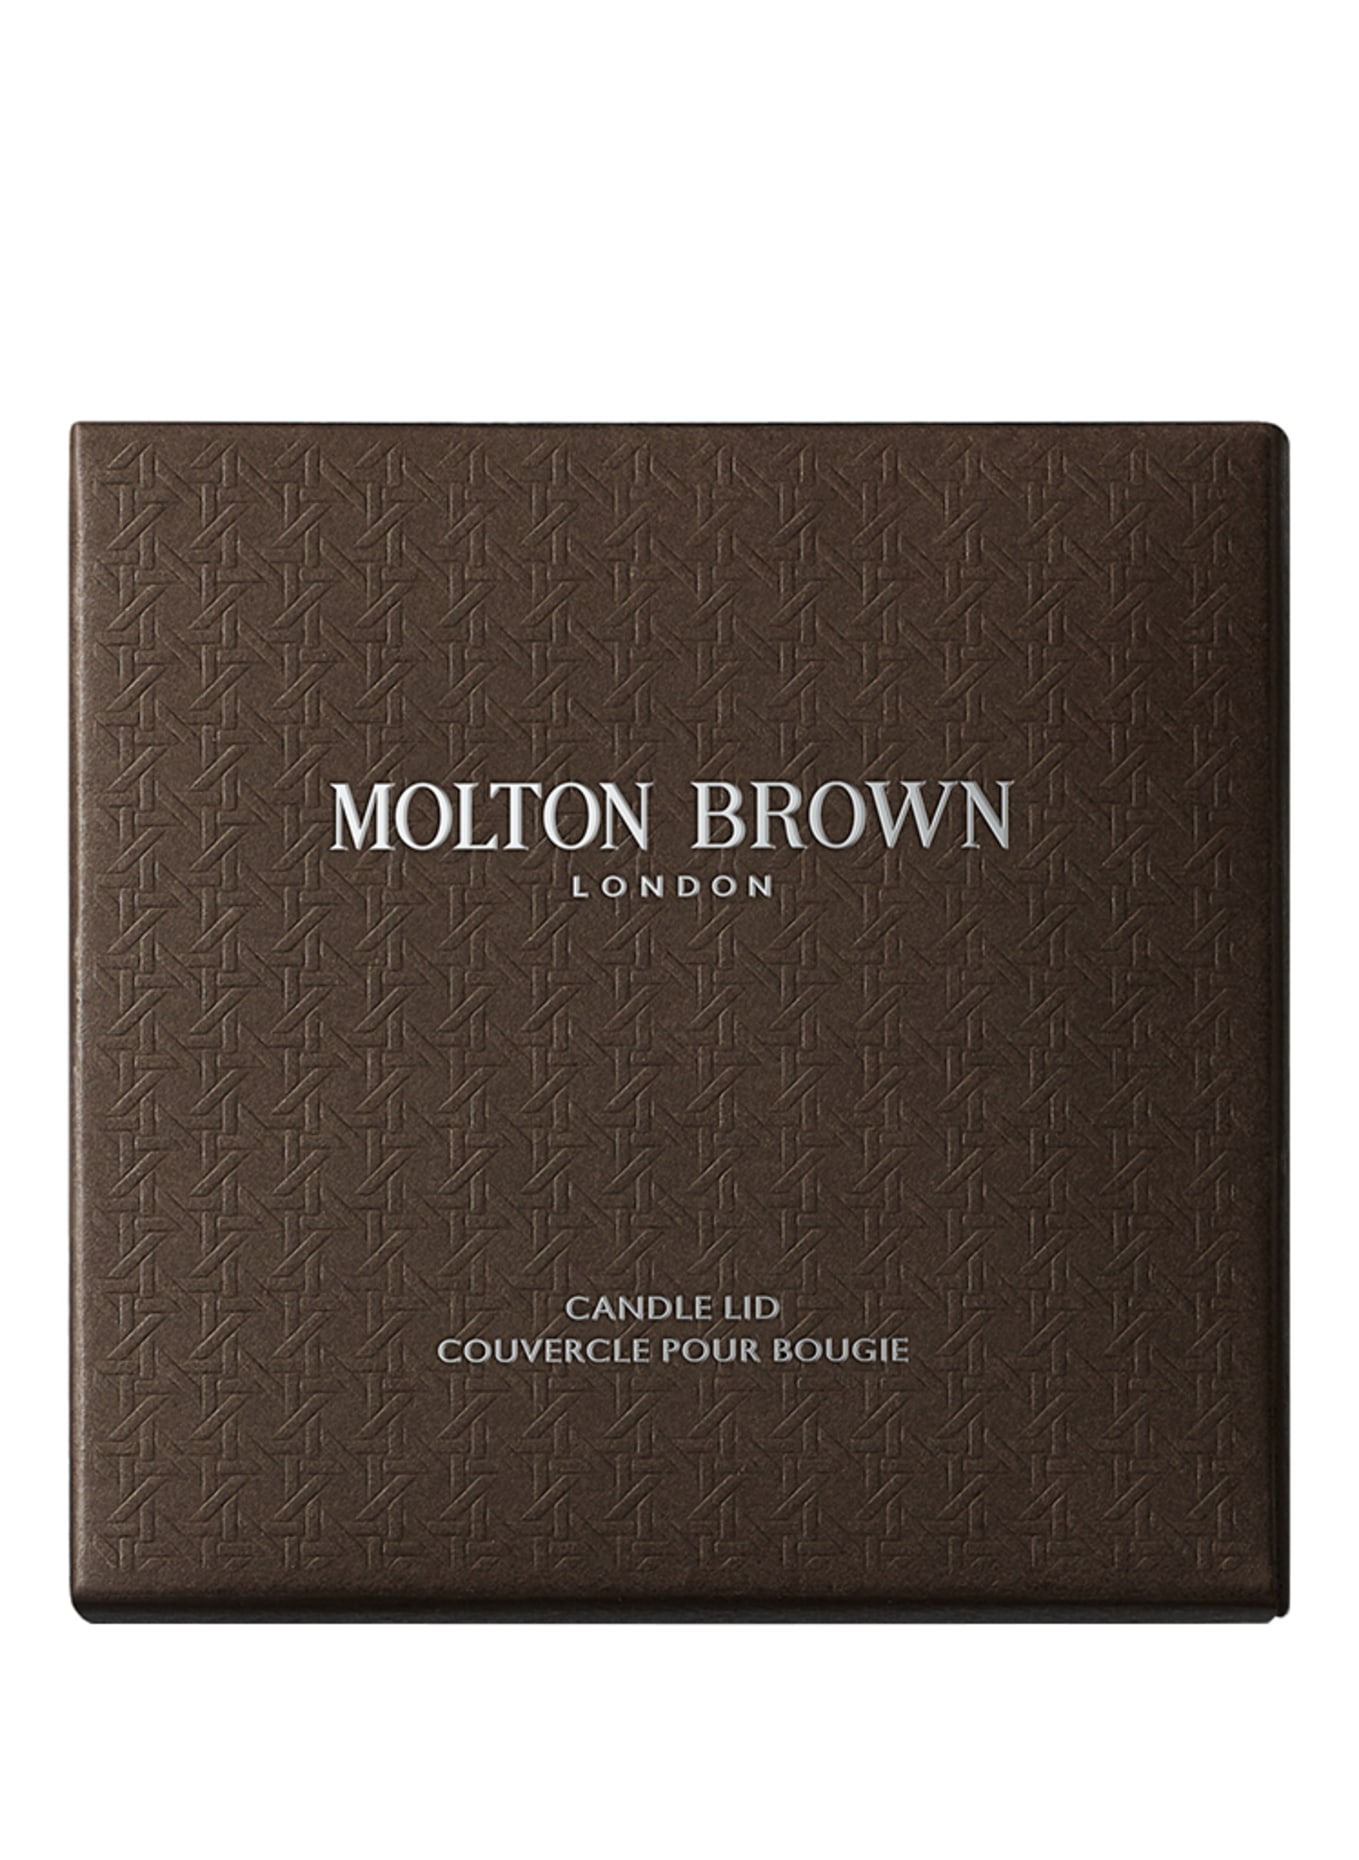 MOLTON BROWN CANDLE LID (Obrázek 2)